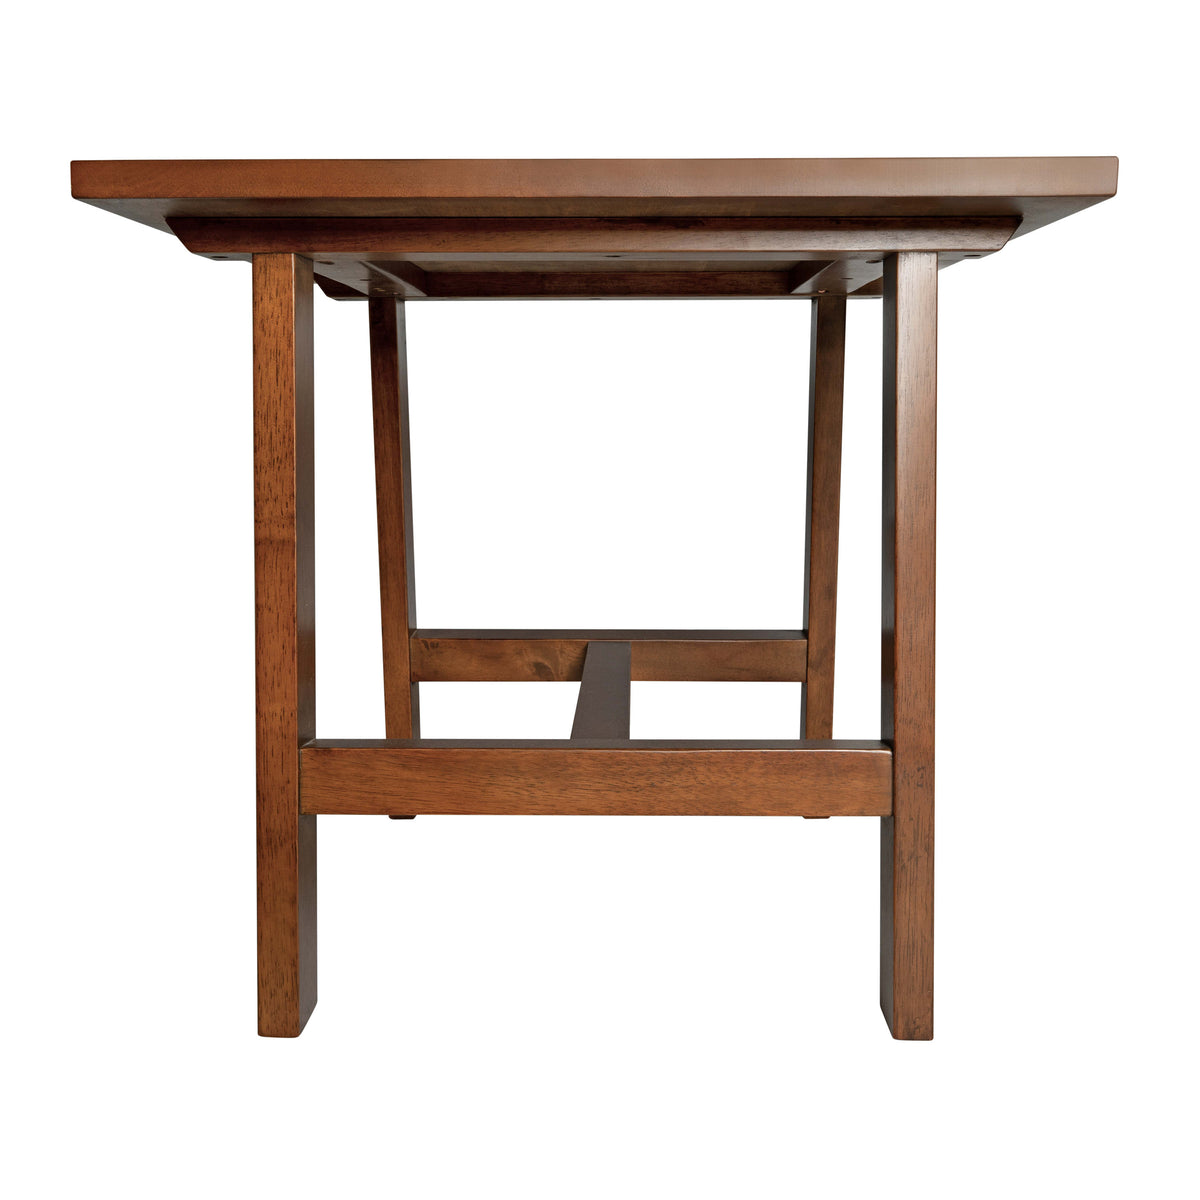 Walnut |#| Solid Wood Farmhouse Trestle Style End Table in Walnut